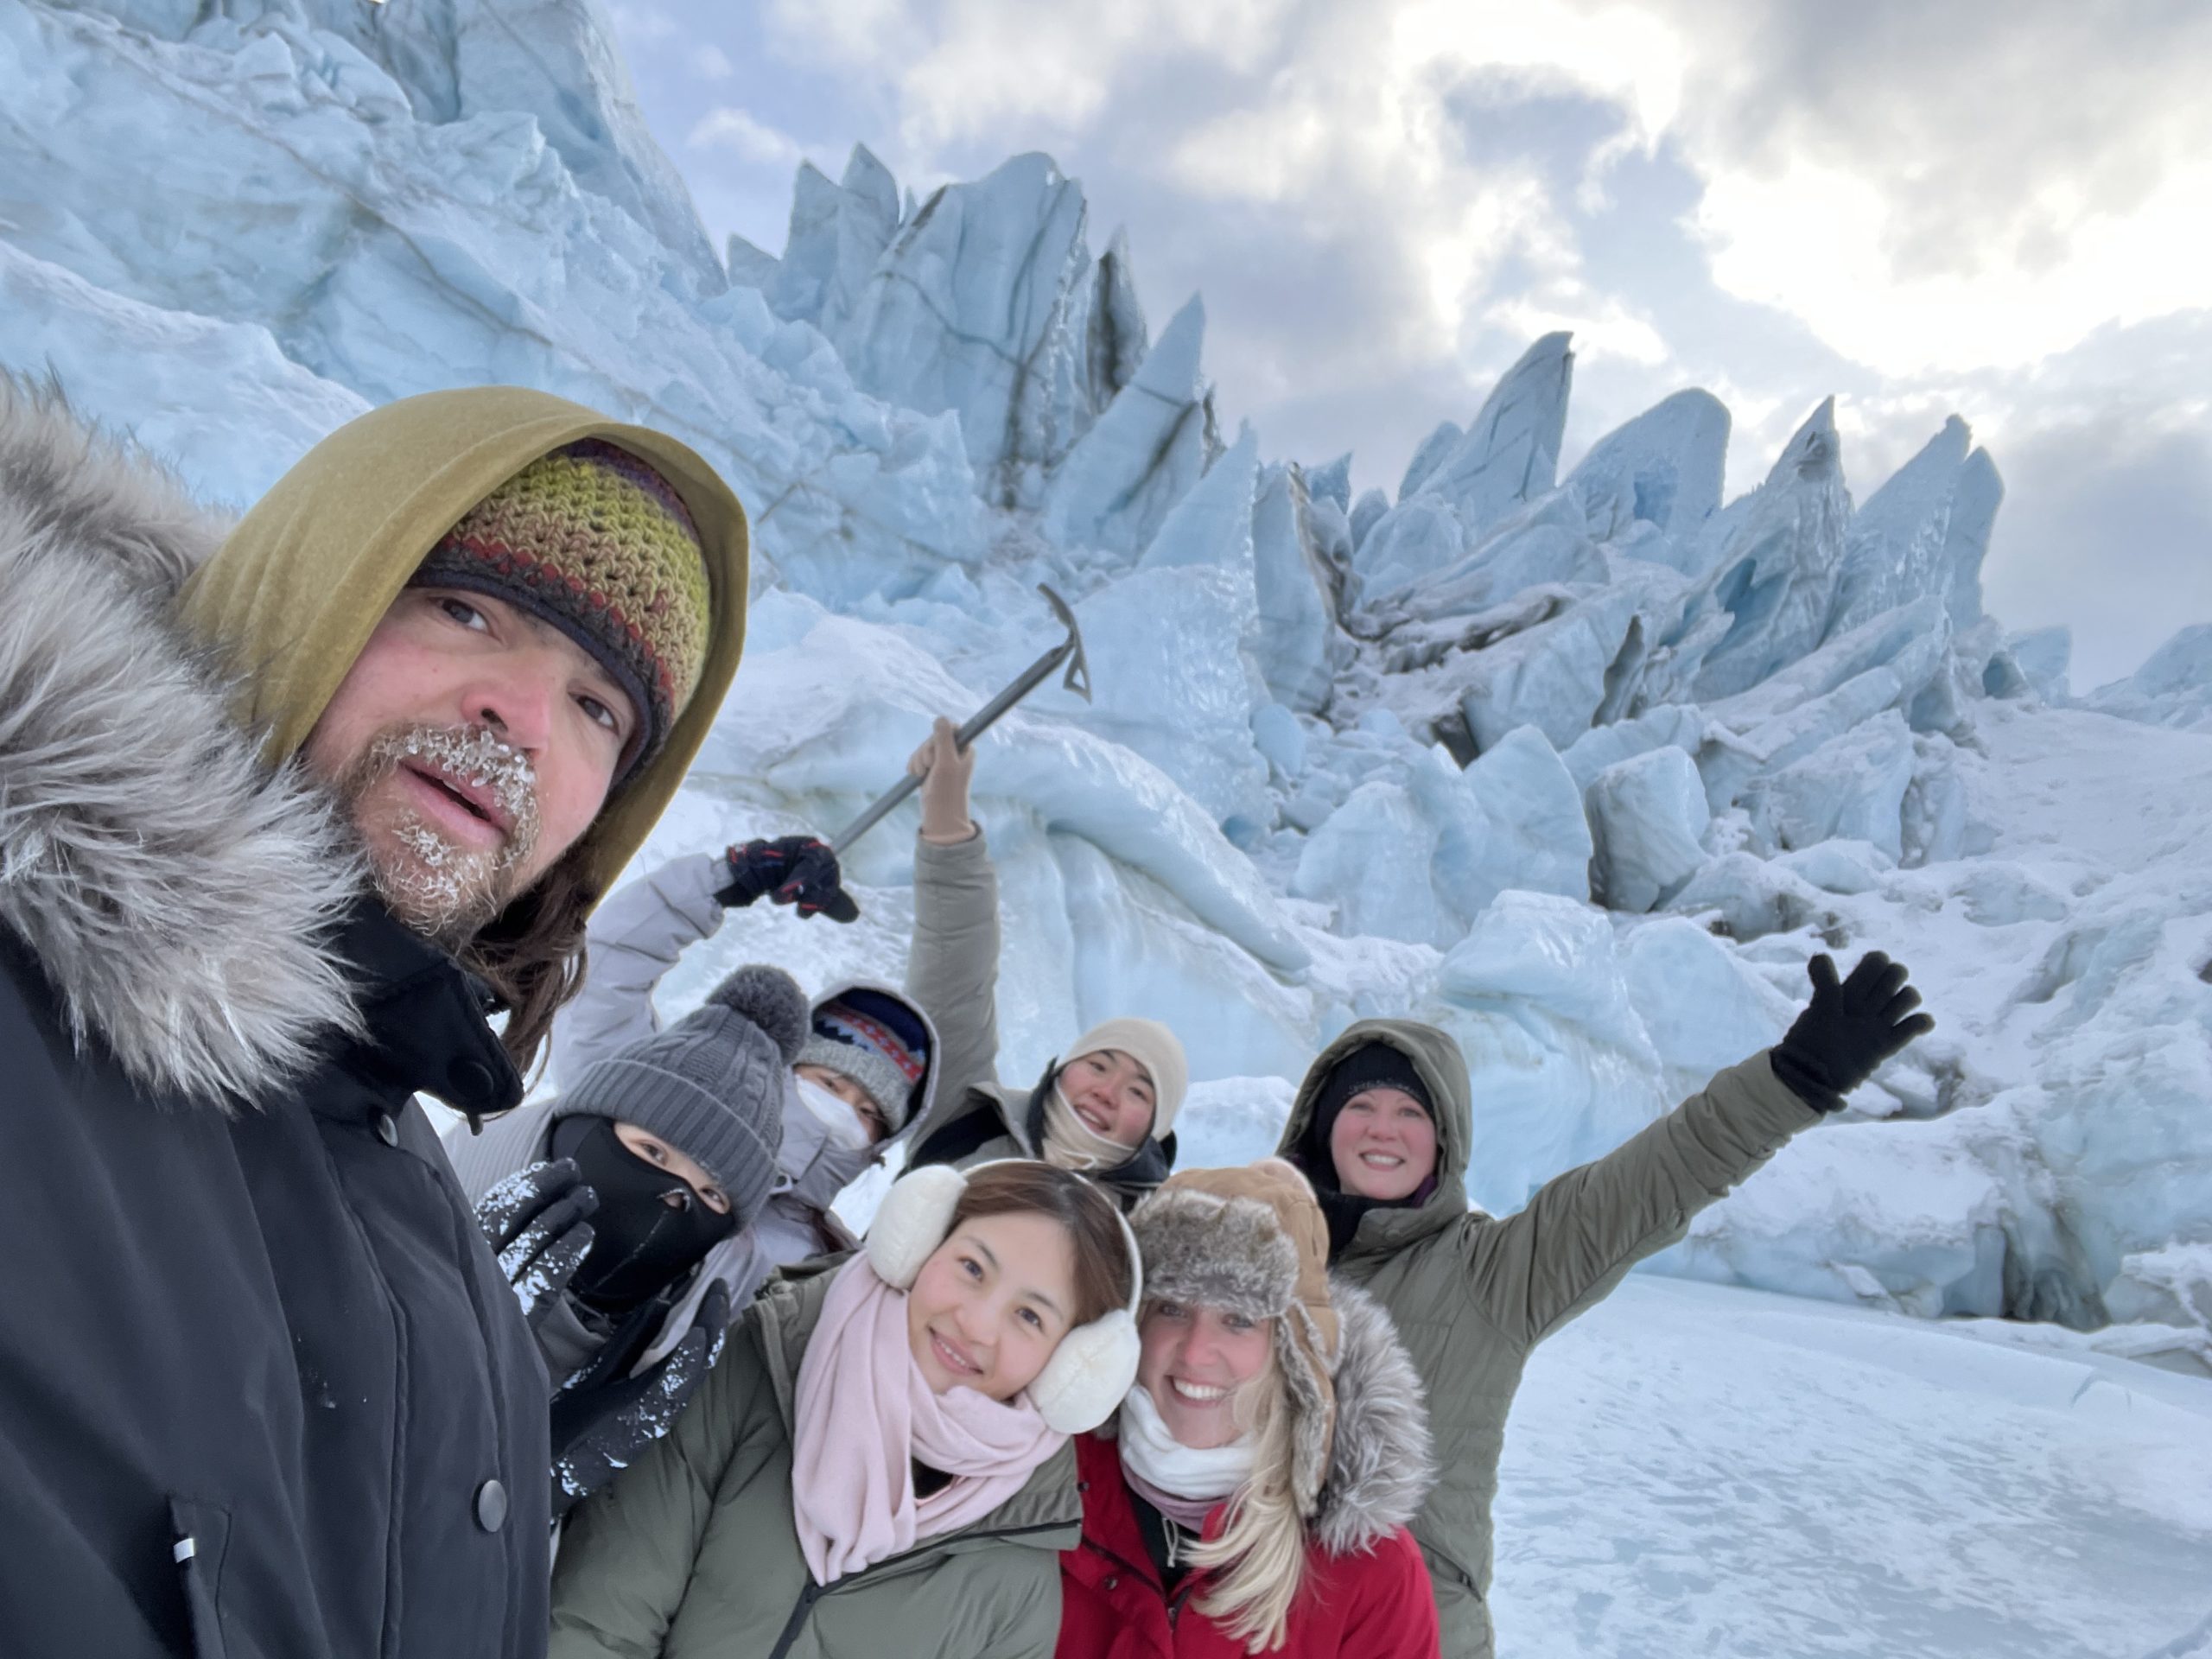 Matanuska glacier in winter with group